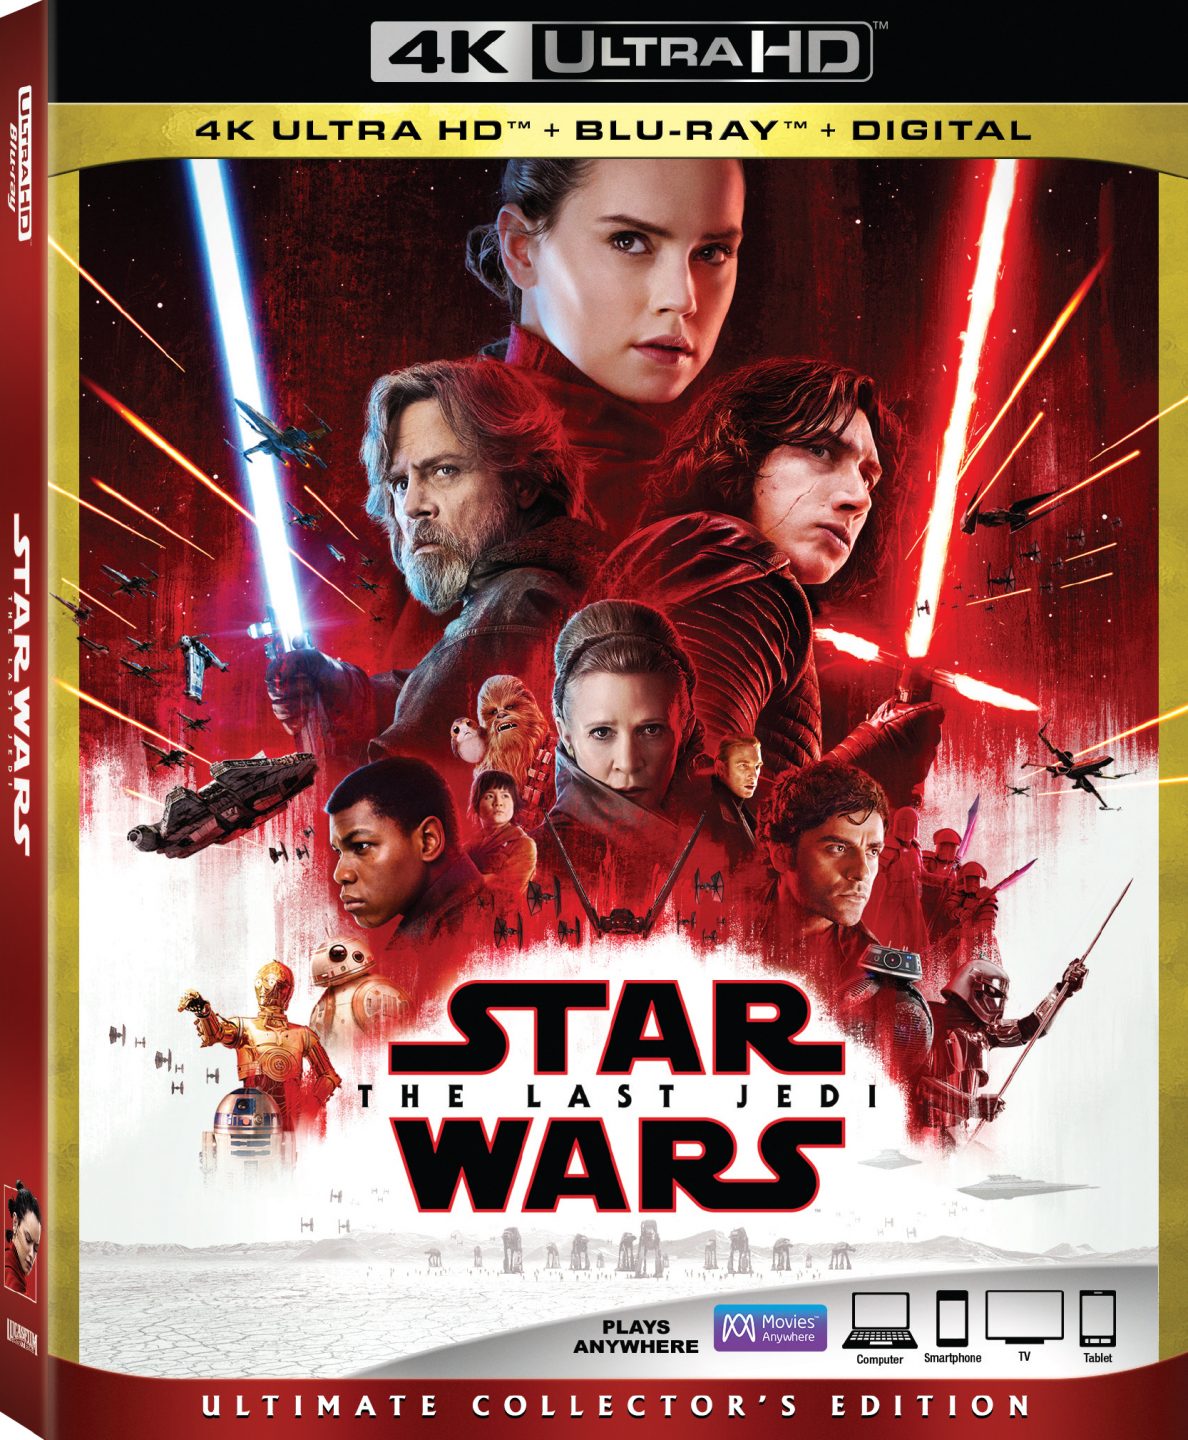 Star Wars: The Last Jedi 4K Ultra HD/Blu-Ray Combo cover (Walt Disney Studios Home Entertainment)